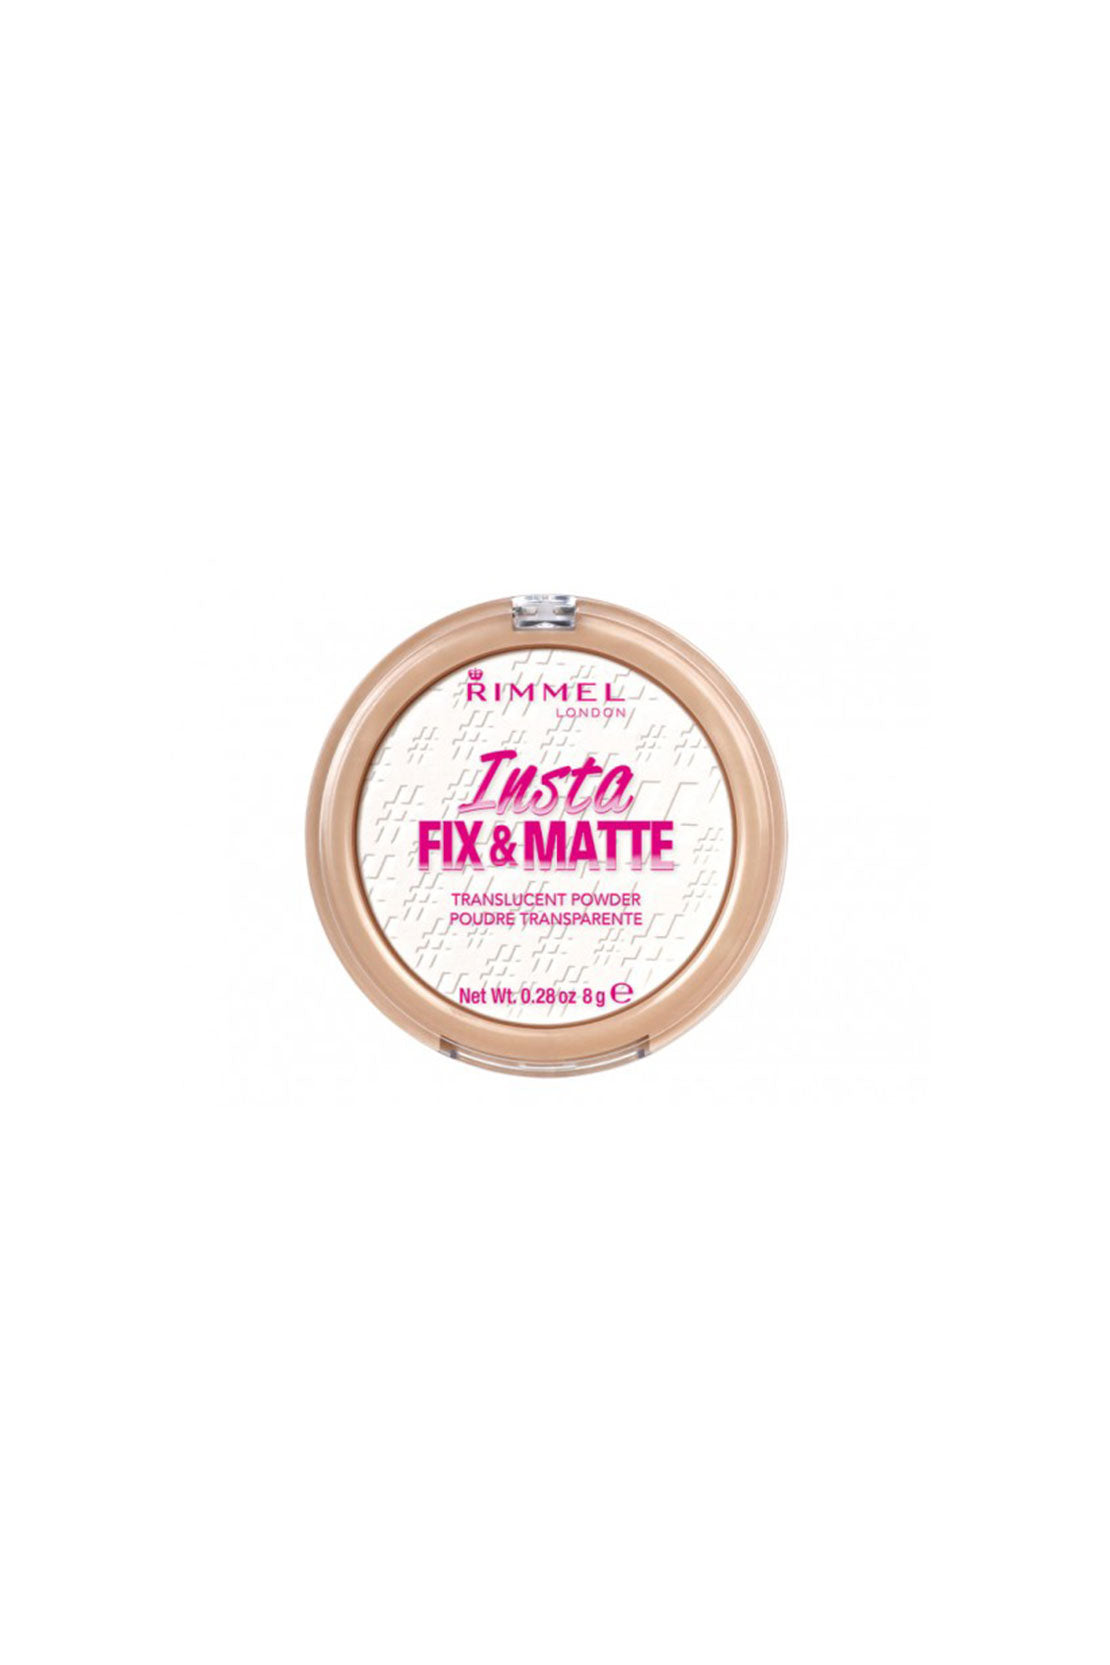 Insta Fix & Matte #1 Translucent Face Powder RIOS